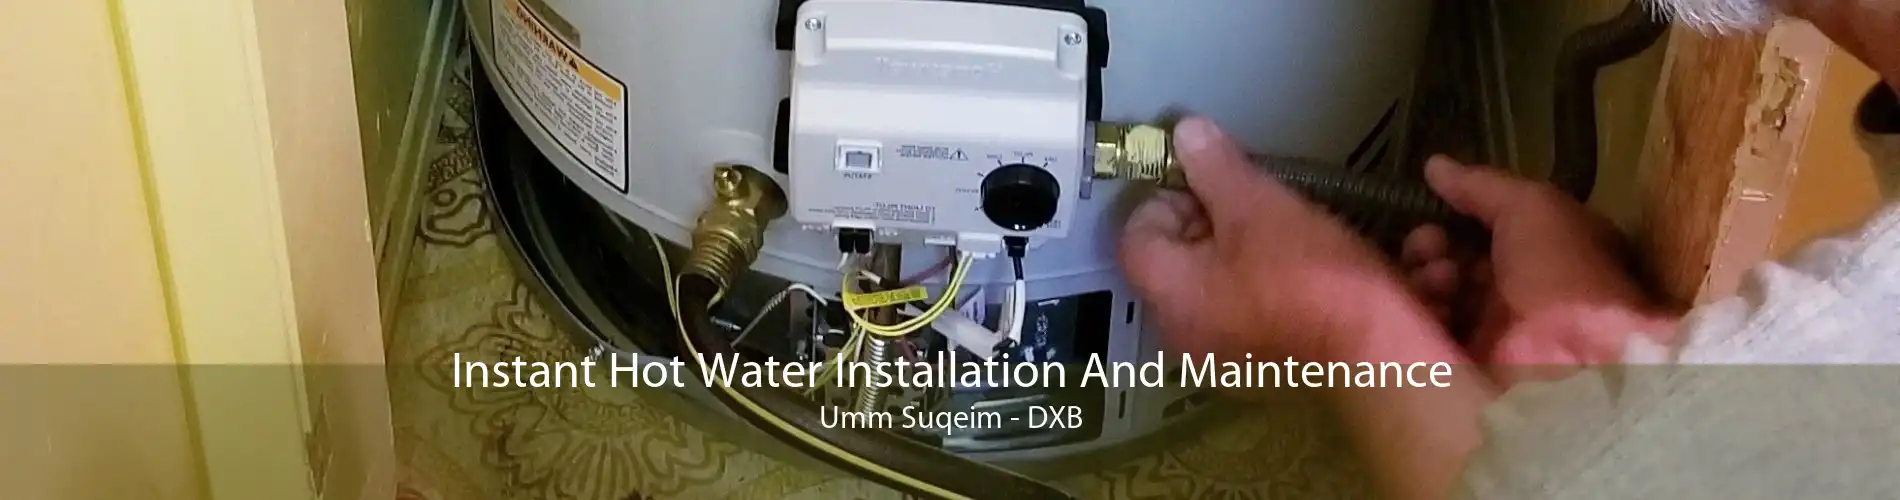 Instant Hot Water Installation And Maintenance Umm Suqeim - DXB